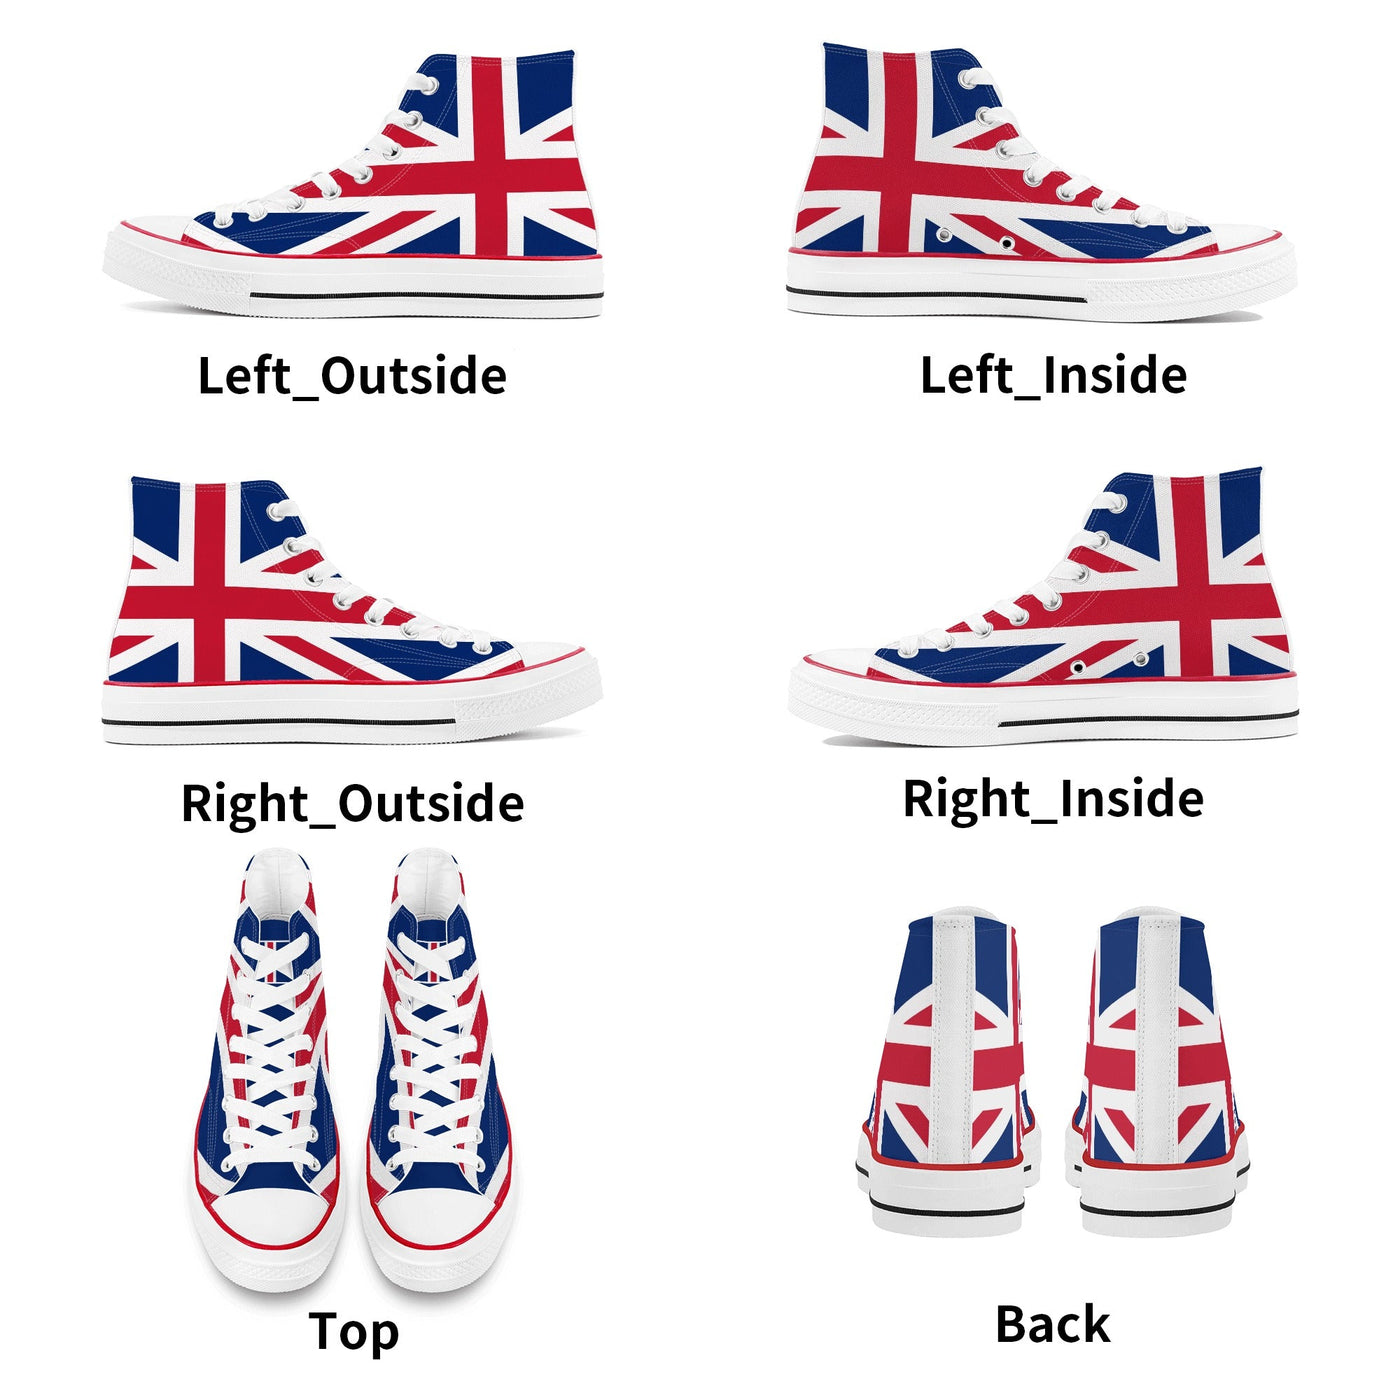 Union Jack British Flag | Punk Rock High Top Canvas Sneakers (Women's Sizes)